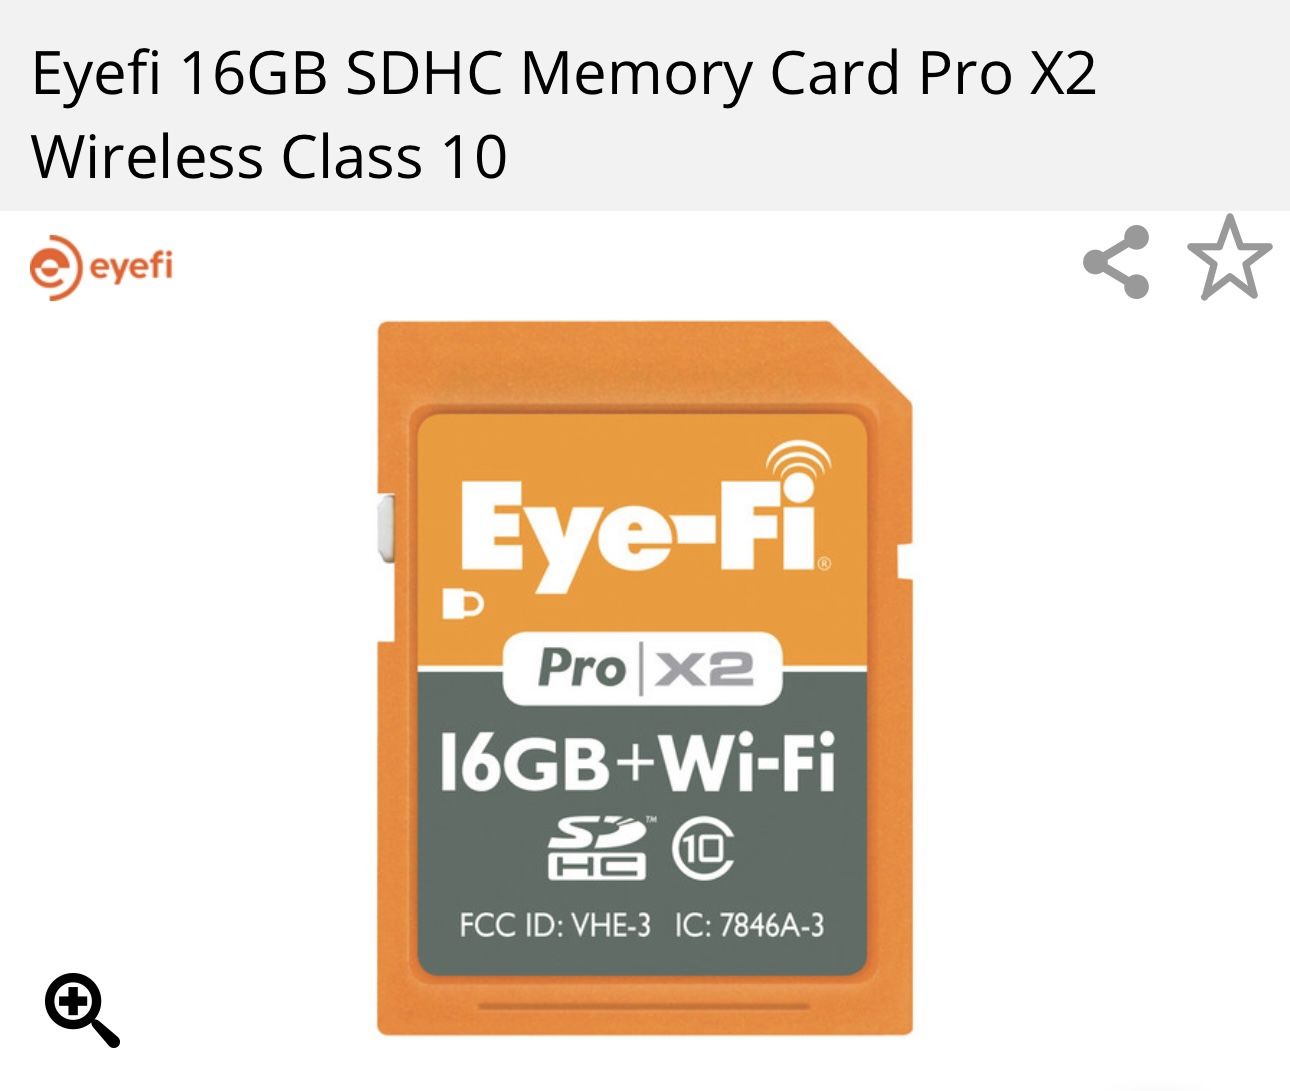 Eyefi 16GB SDHC Memory Card Pro X2 Wireless Class 10